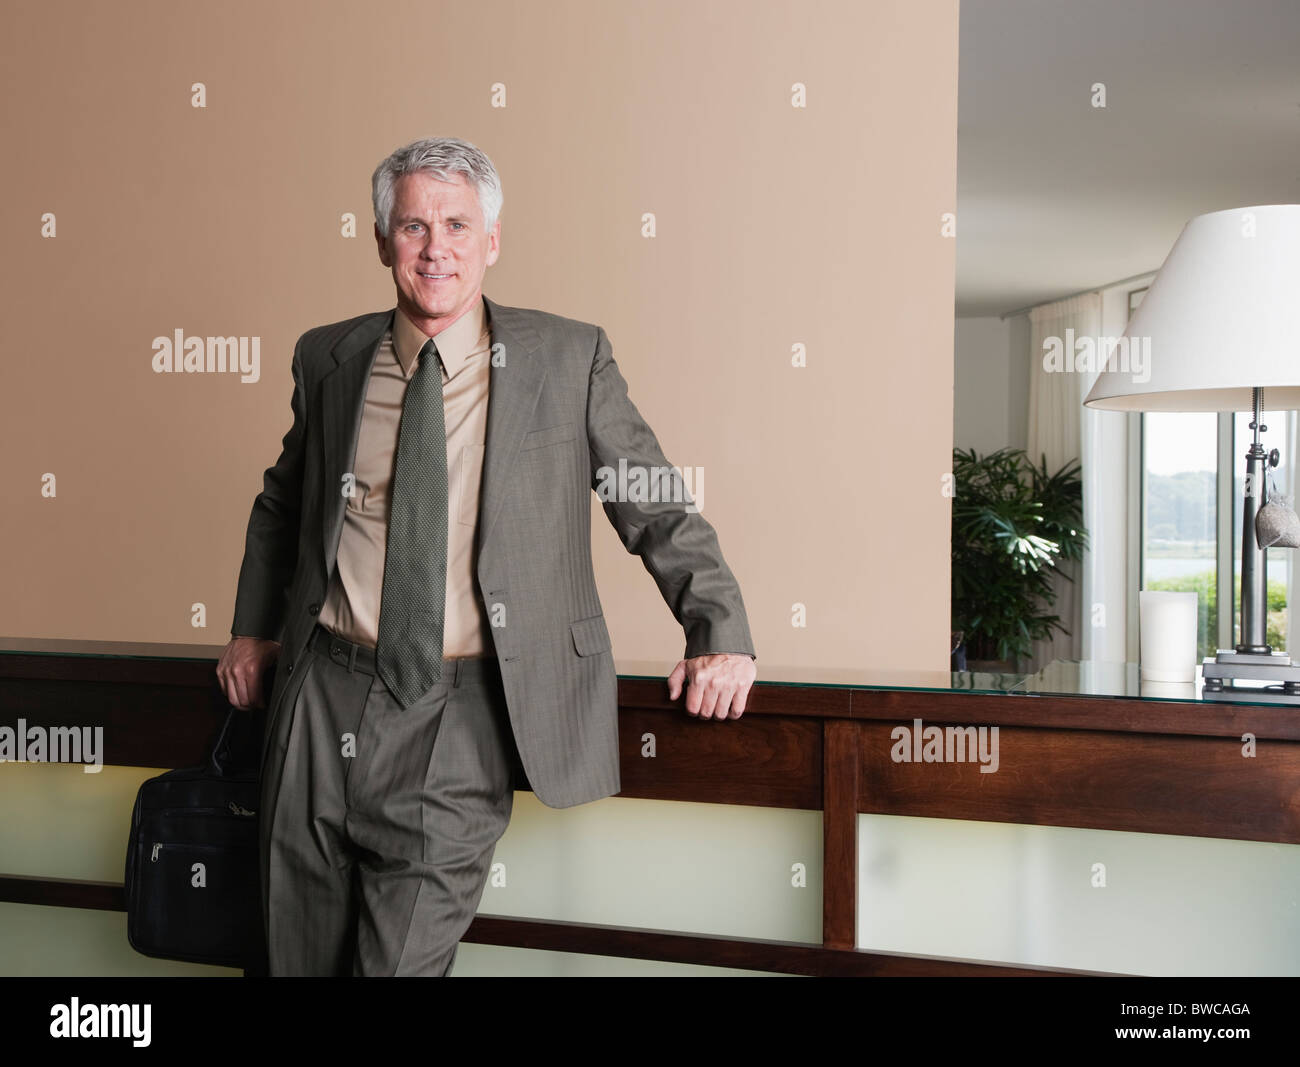 USA, California, Mill Valley, Businessman at hotel reception Stock Photo